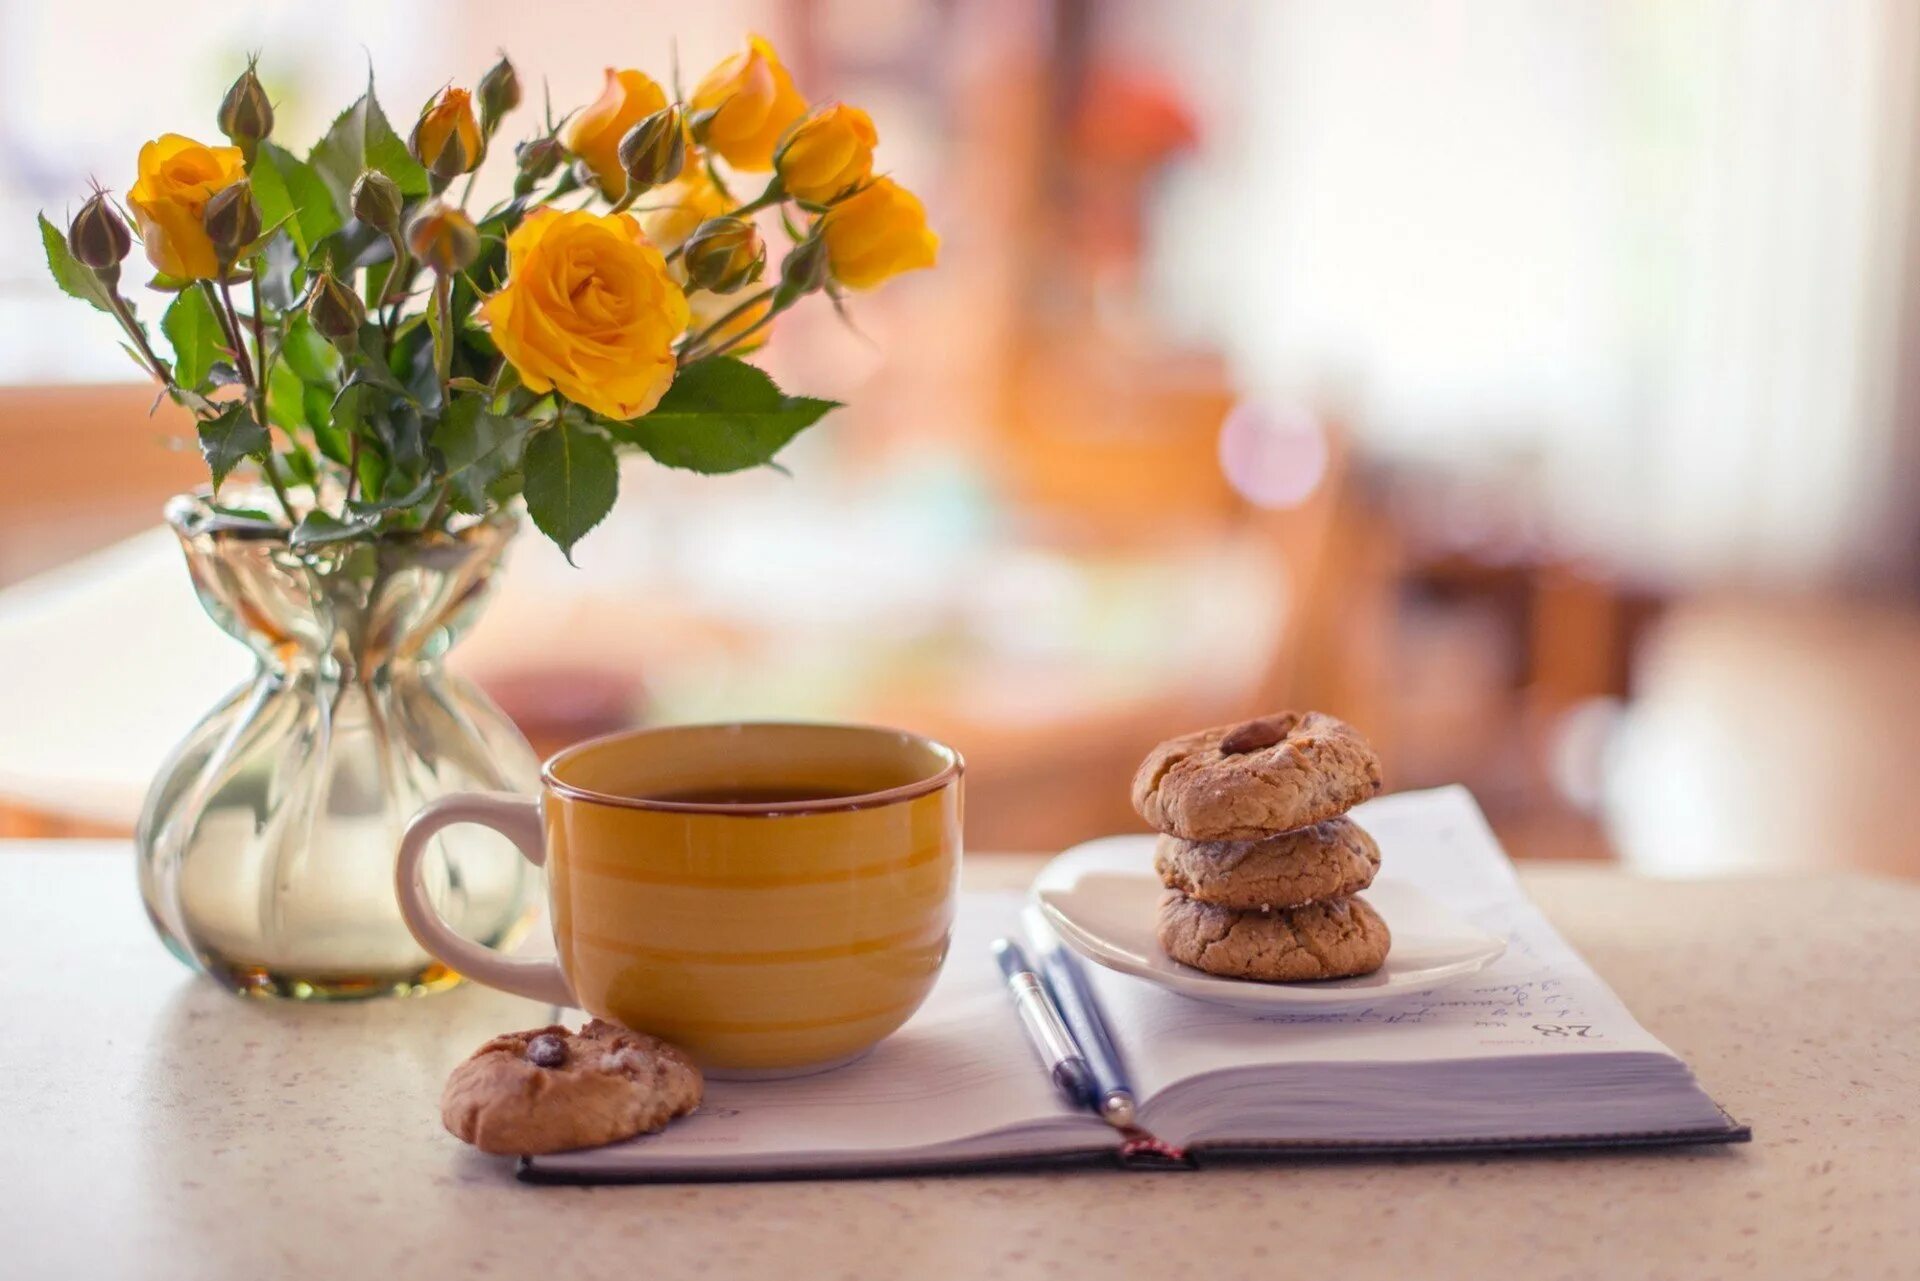 Утро нового дня картинки. Весеннее чаепитие. Утреннее чаепитие. Солнечное утро цветы кофе. Утро кофе солнце.